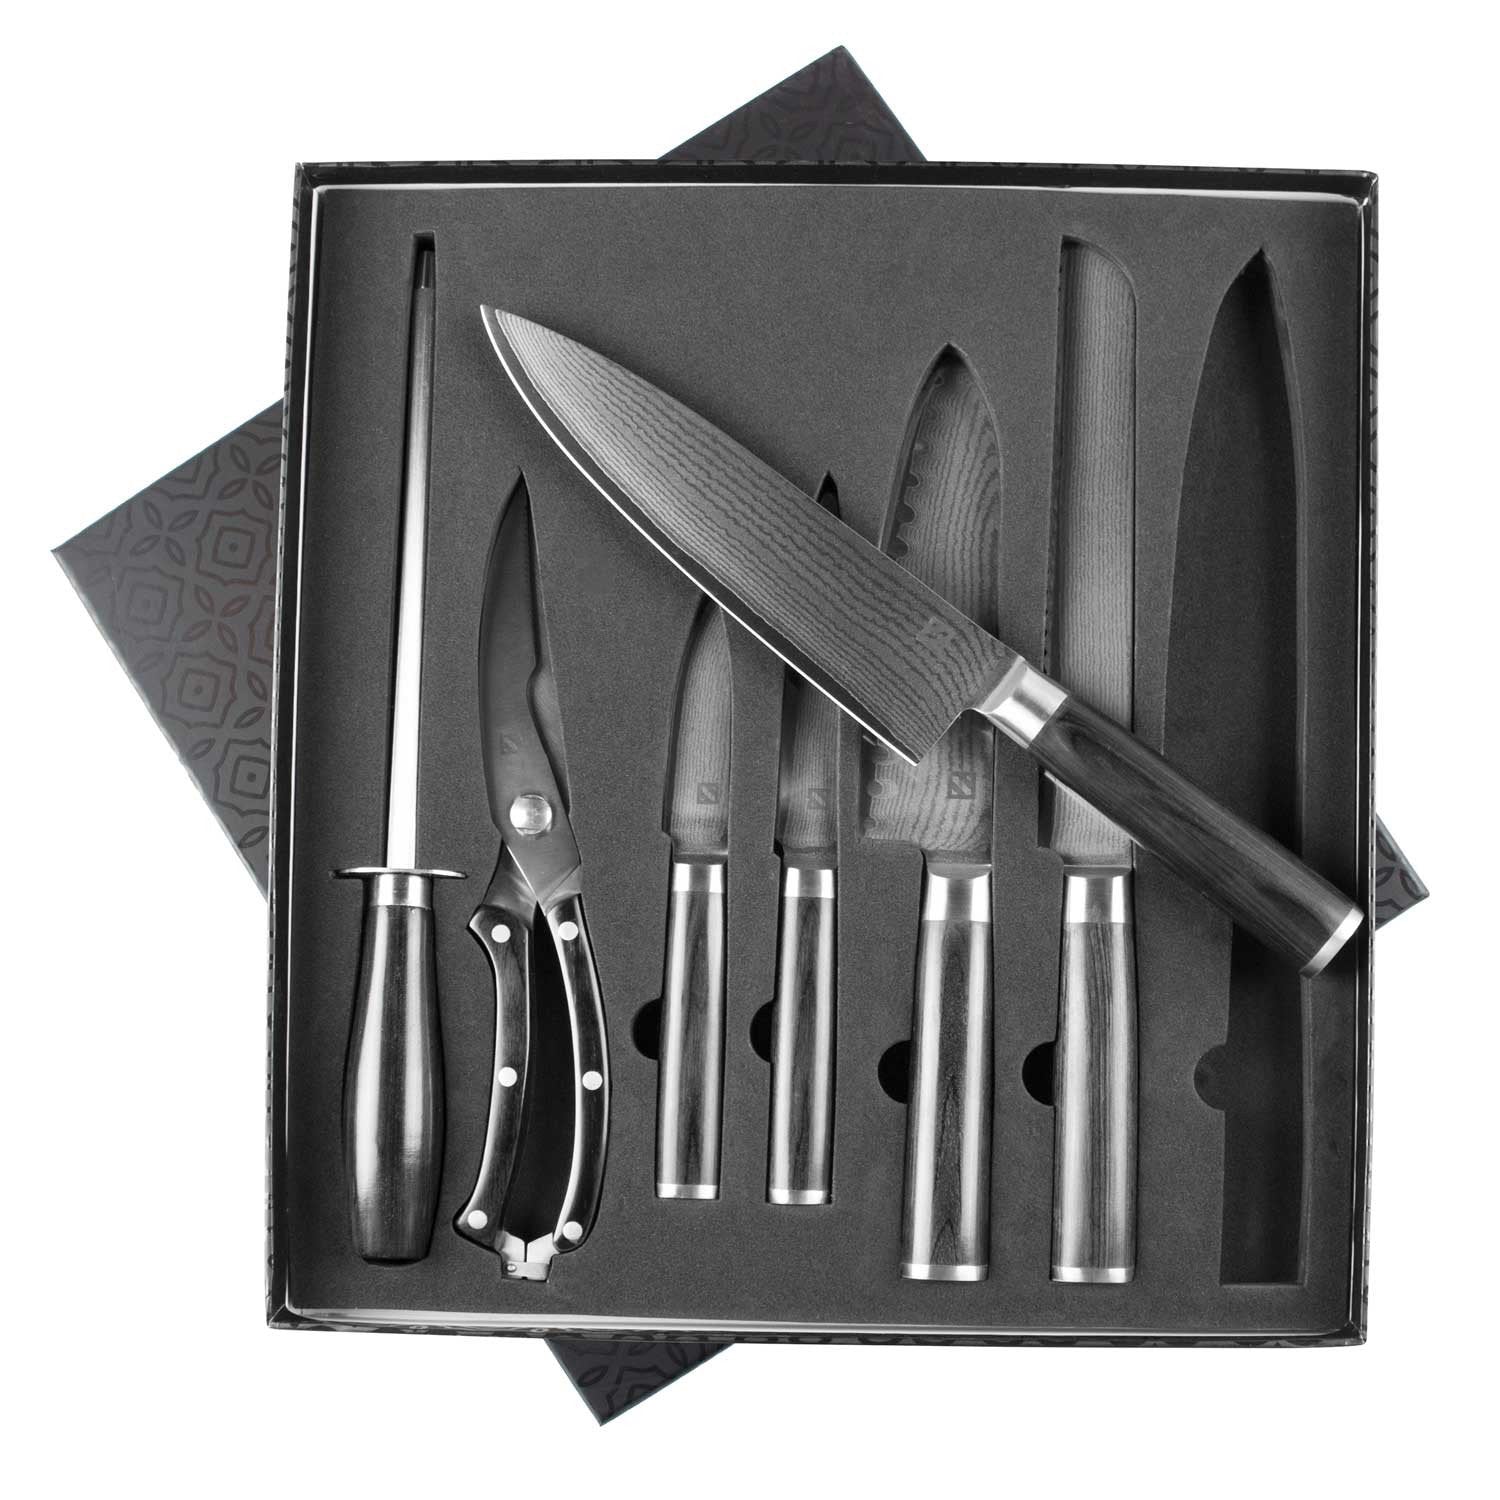 7pc Japanese Damascus Steel Knife Set